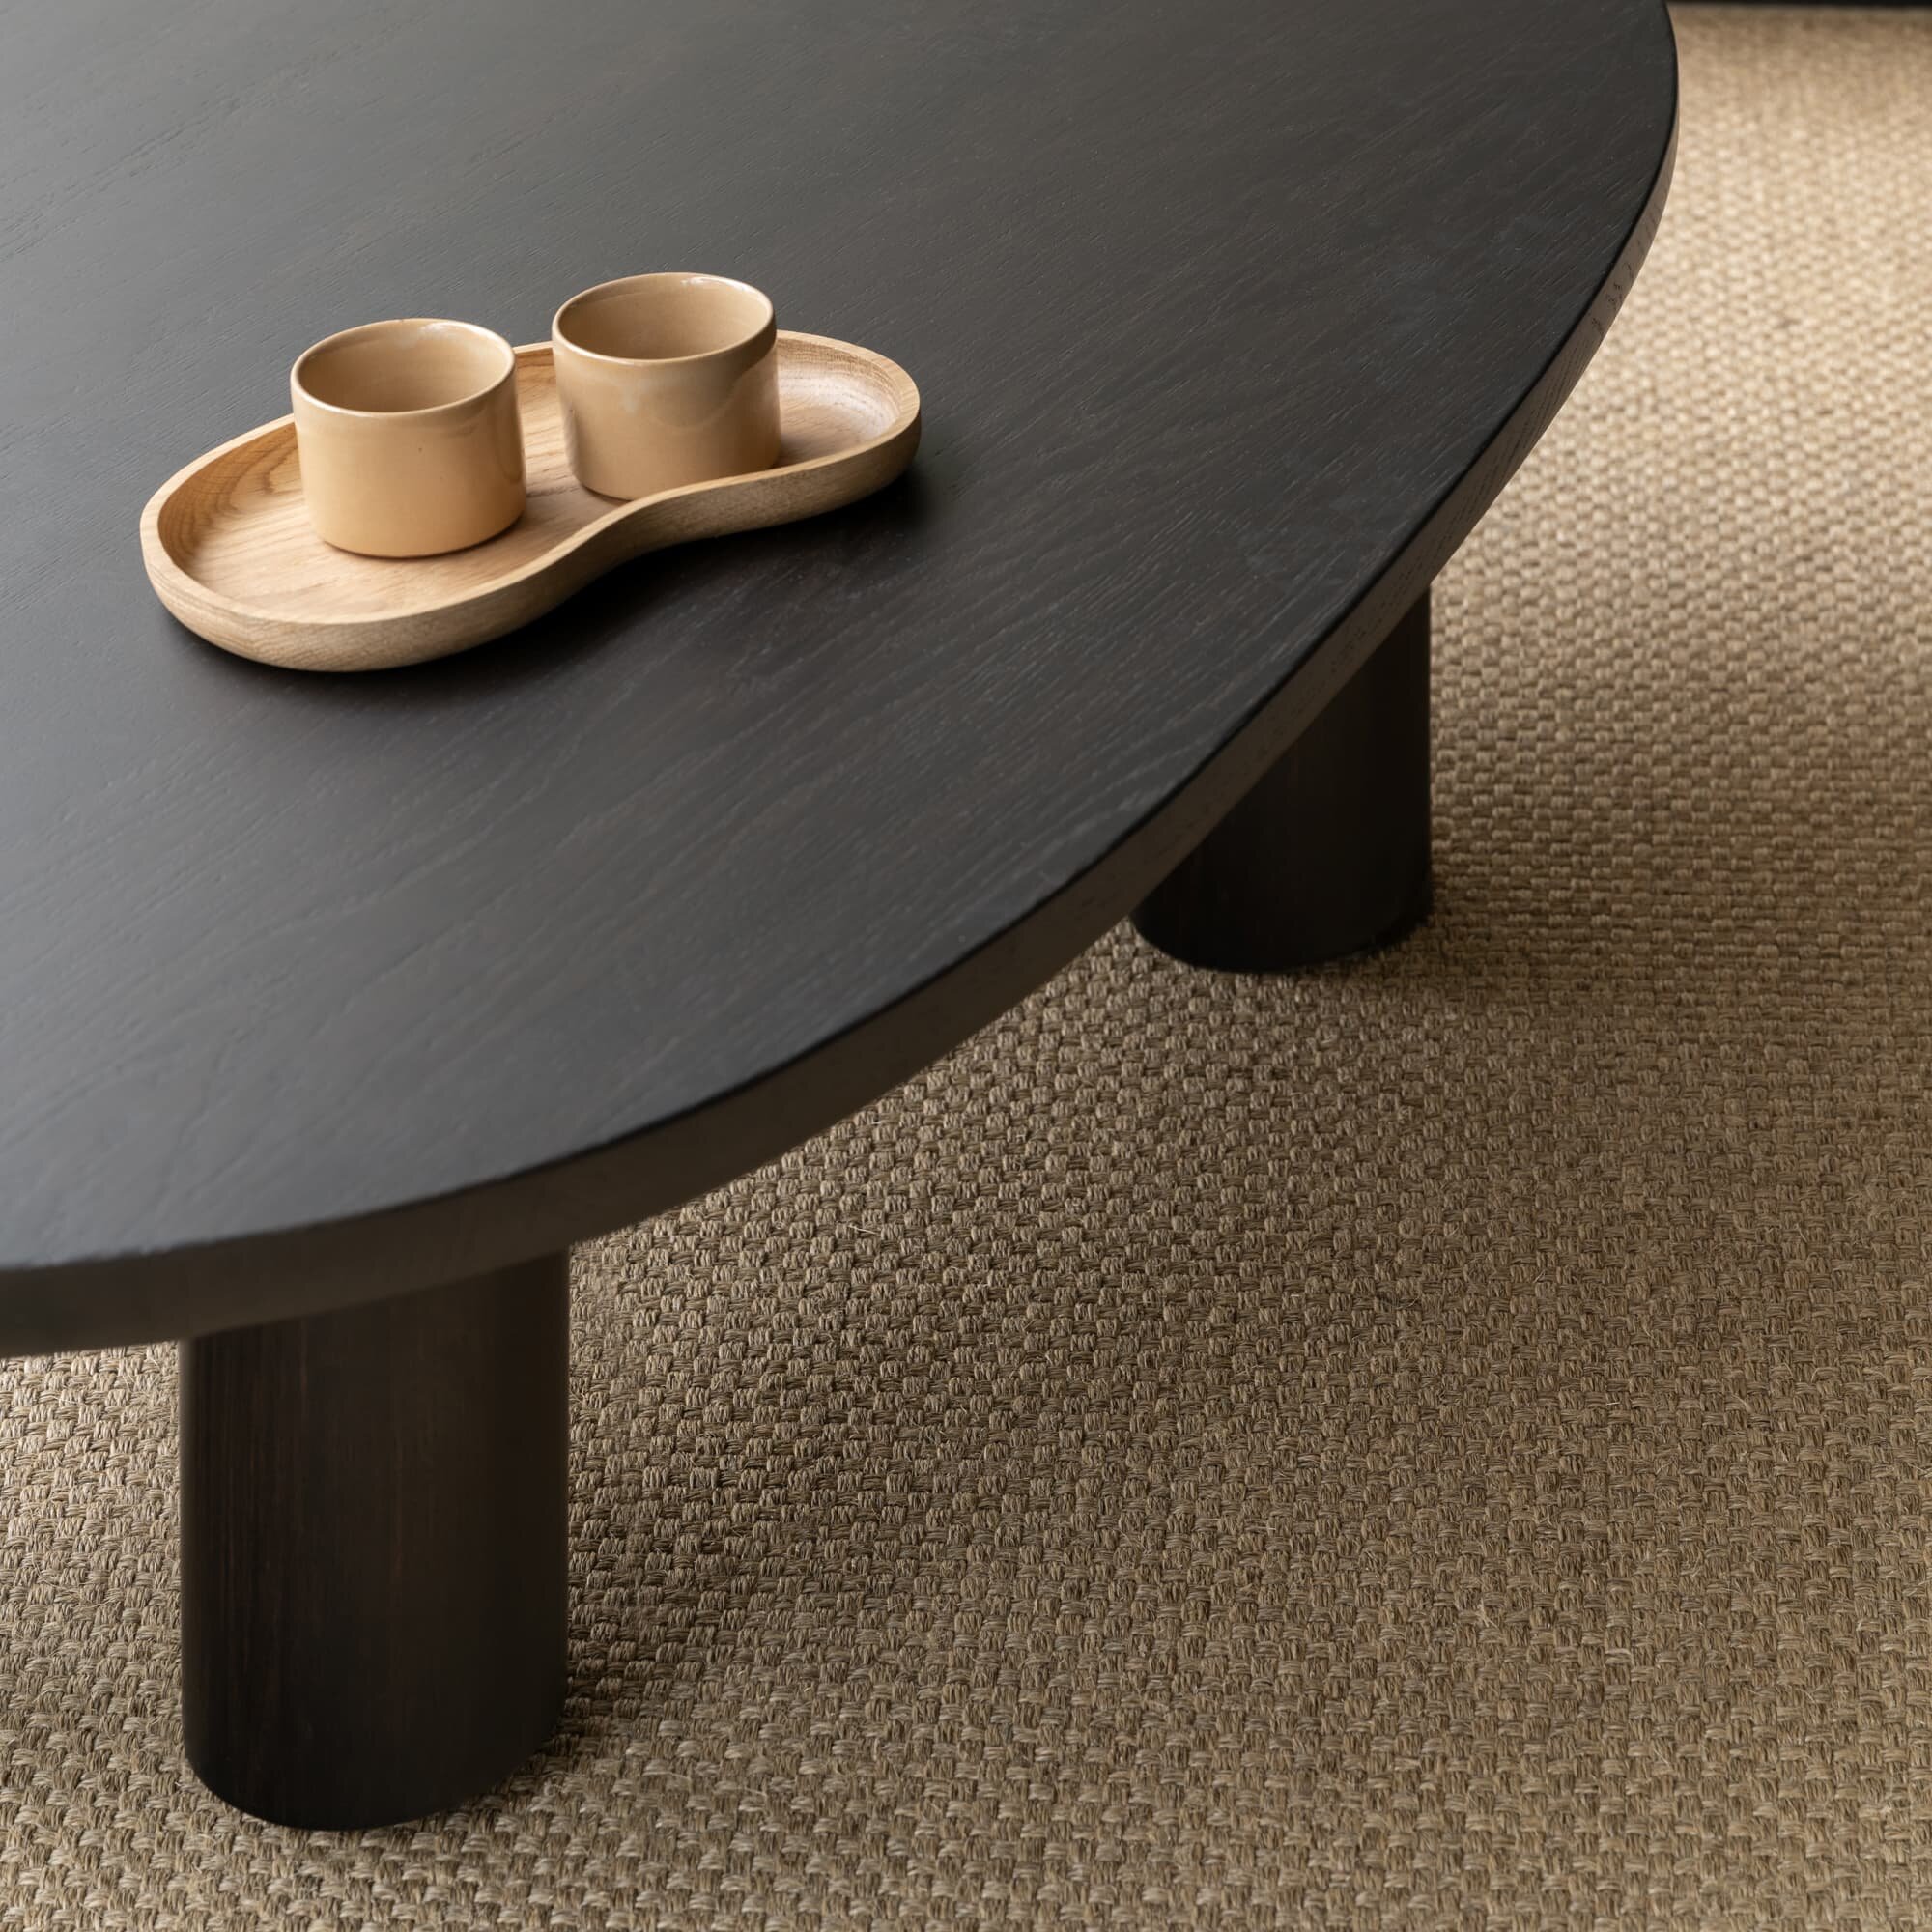 Design Coffee Table | Blob Coffee Table Oak hardwax oil natural light 3041 | Oak hardwax oil natural light 3041 | Studio HENK| 